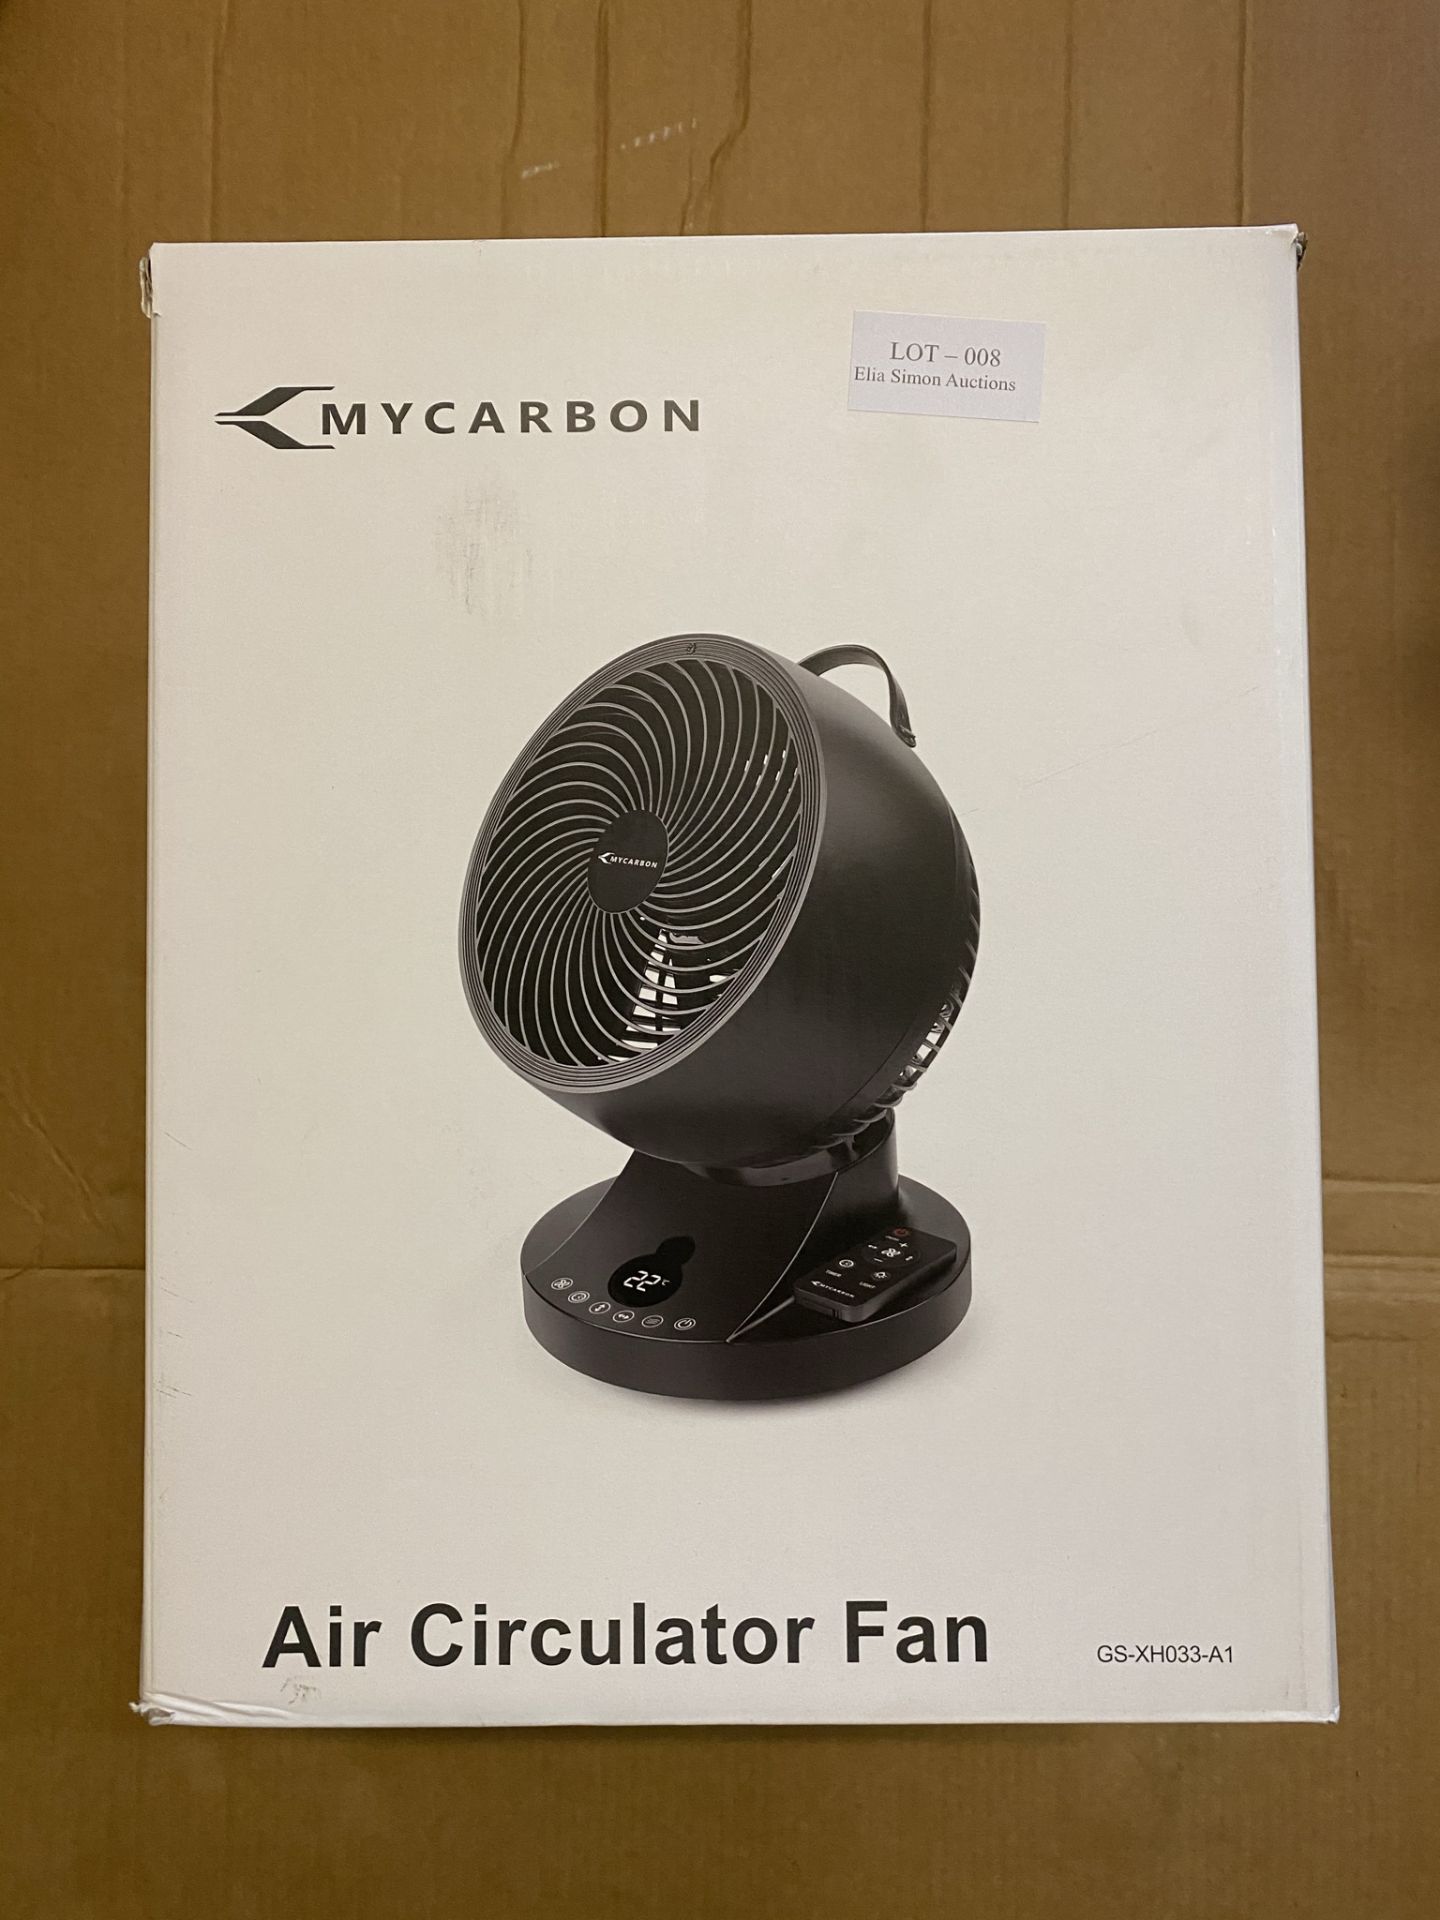 MYCARBON AIR CIRCULATOR FAN FS-XH033-A1